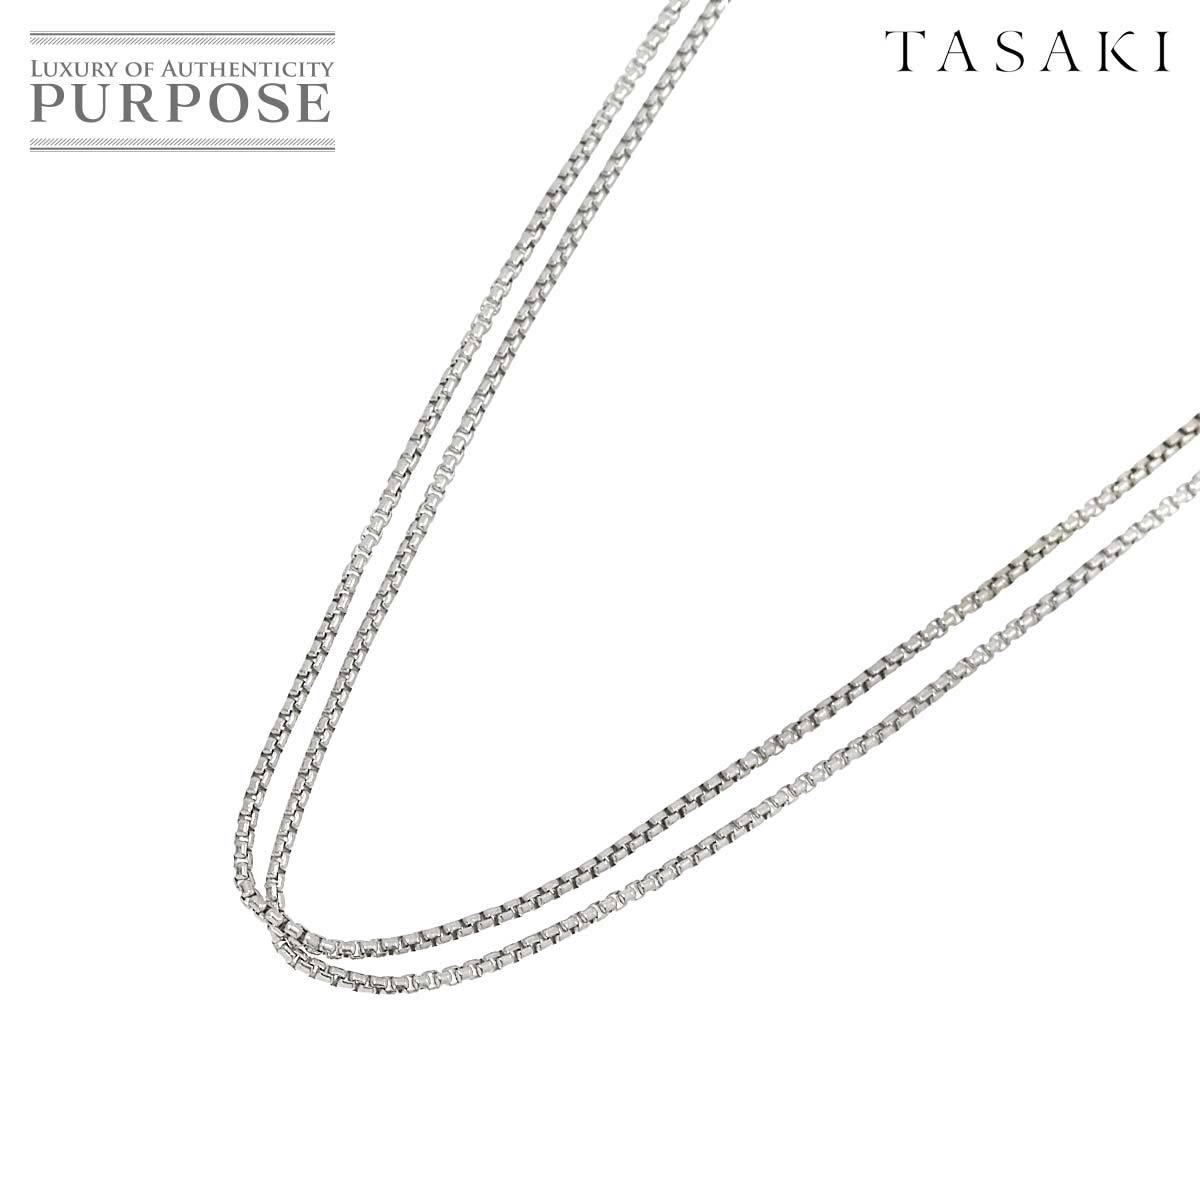 Tasaki Tasaki Chain Collese 54 см K18 WG Белое золото 750 Тазаки Жемчужное колье 90217187